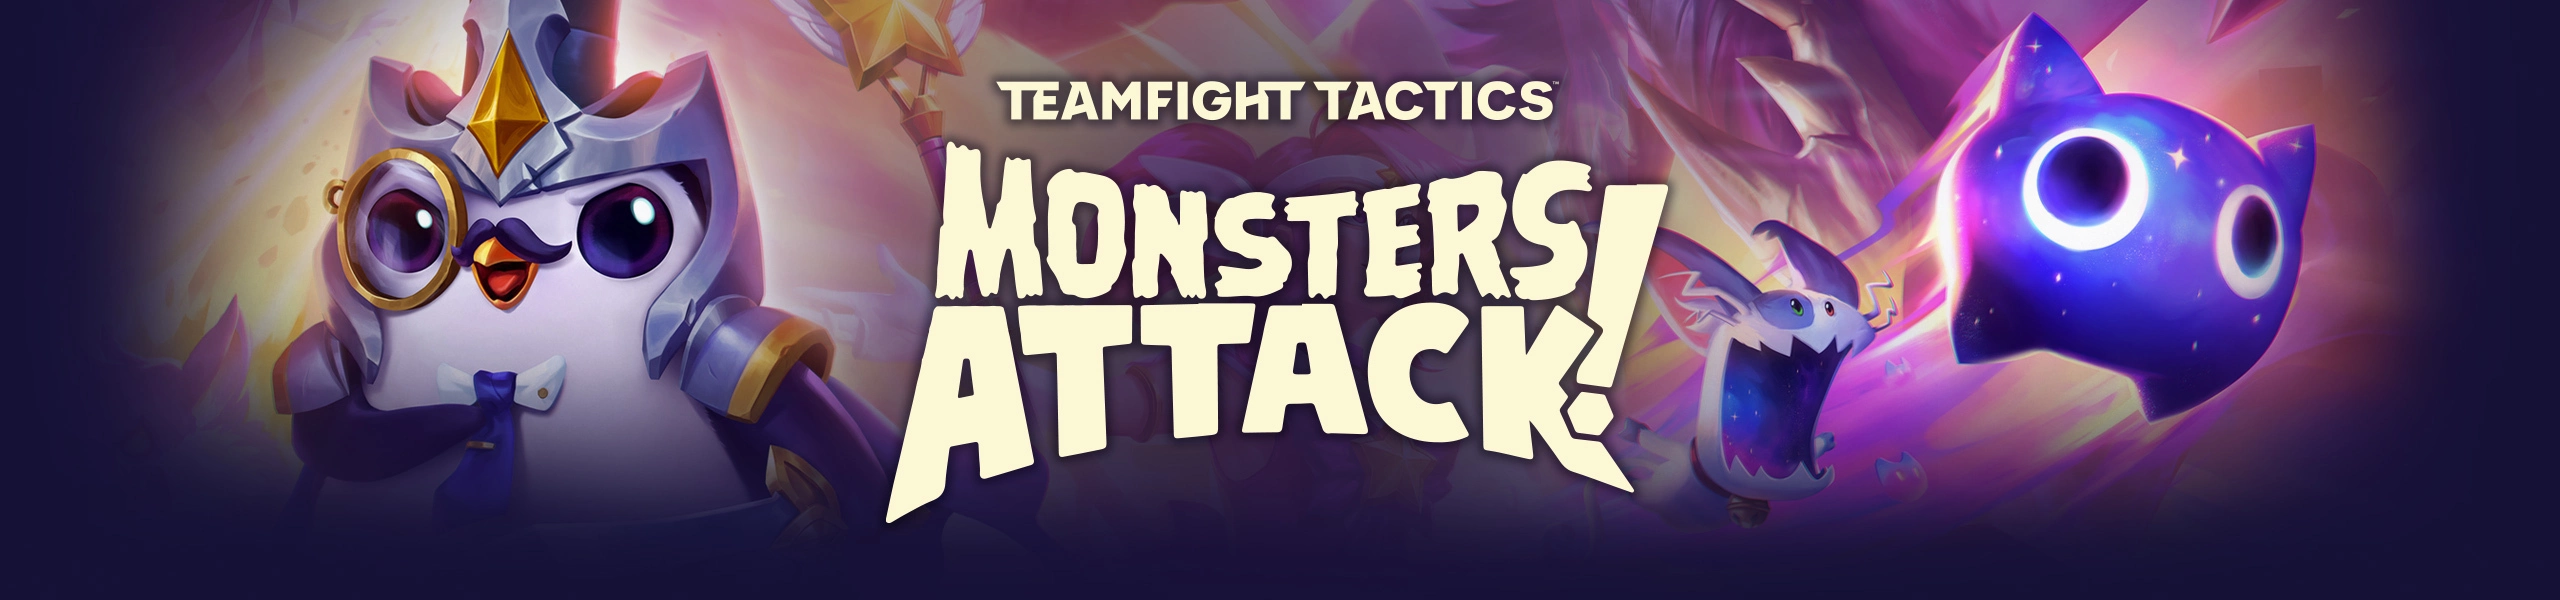 Teamfight Tactics Set 6: Gizmos & Gadgets